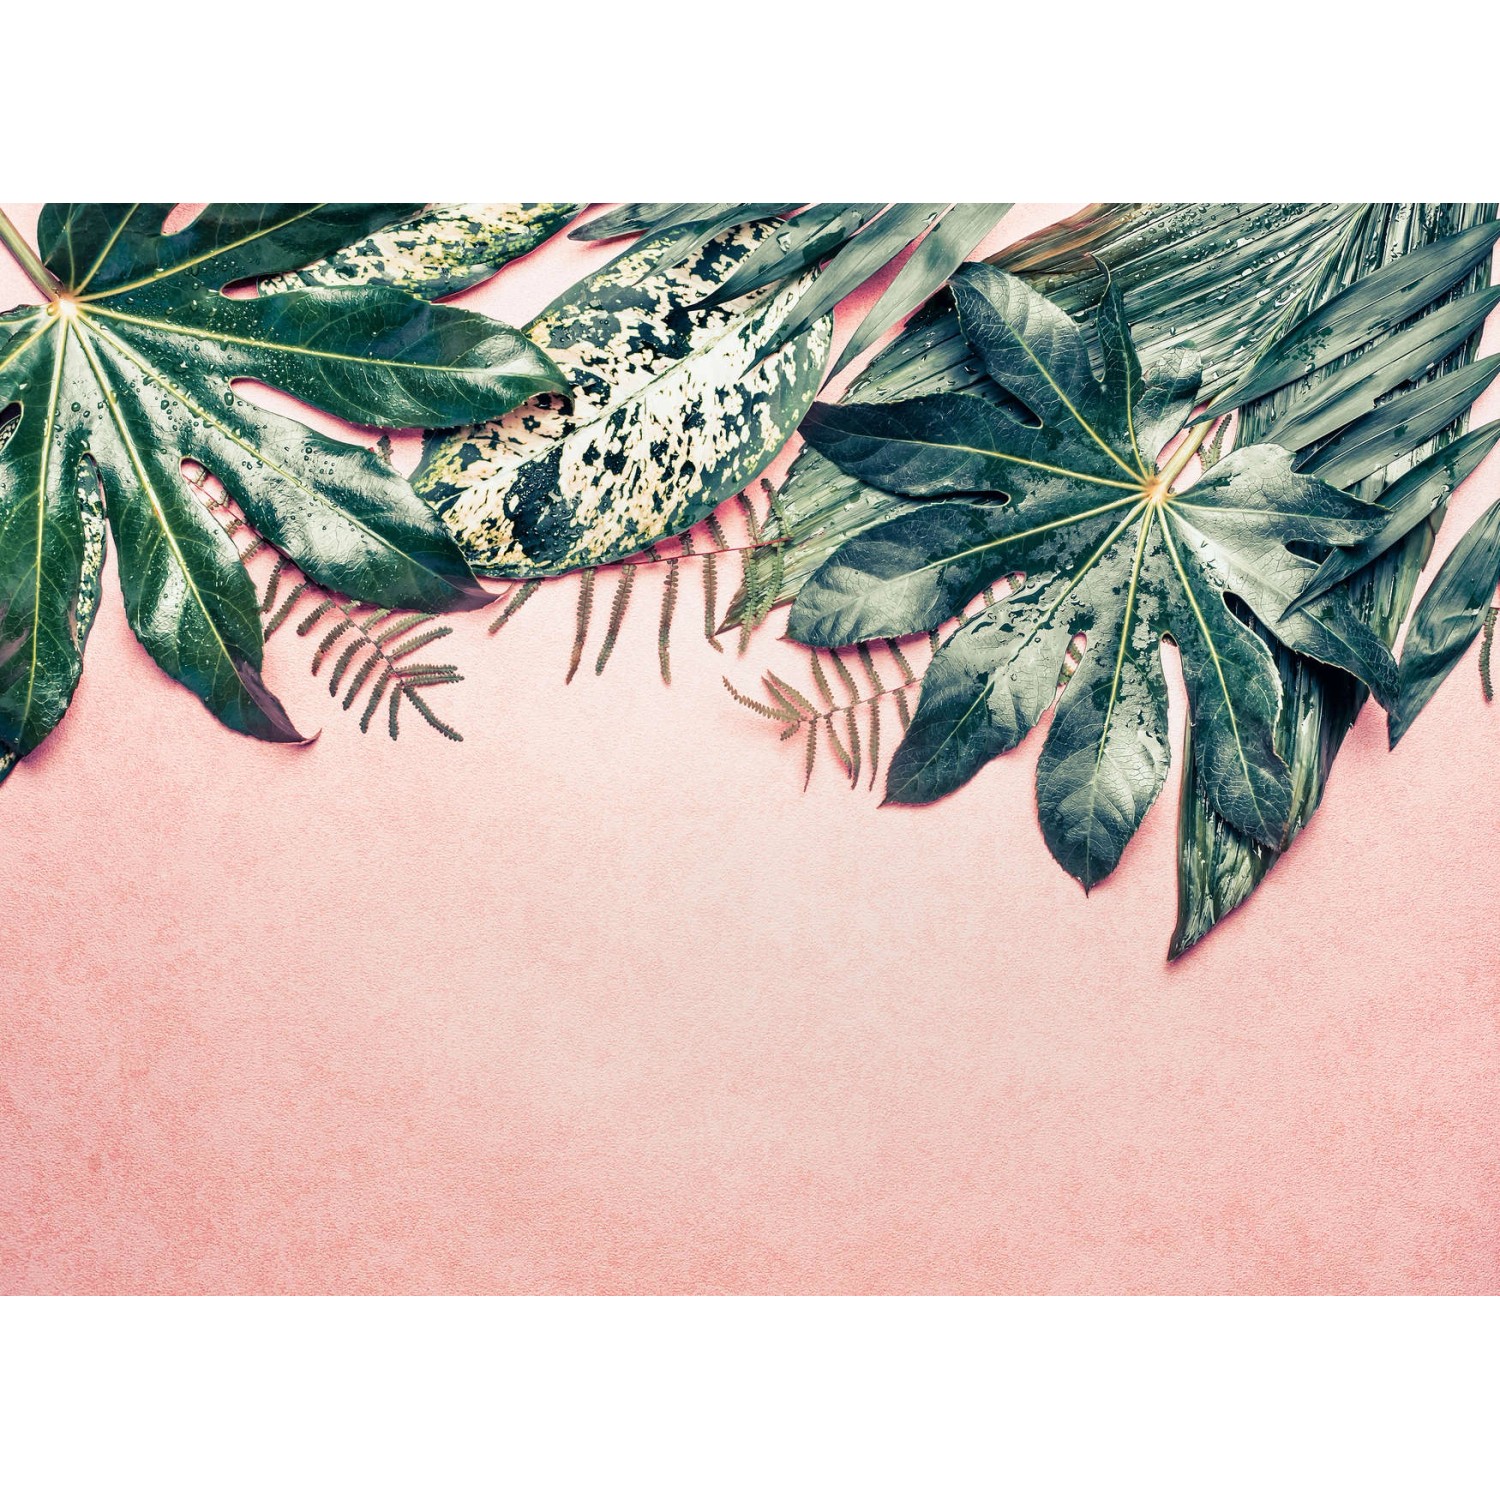 Fototapete Blätter Palmen Grün Rosa 3,50 m x 2,55 m FSC® von -